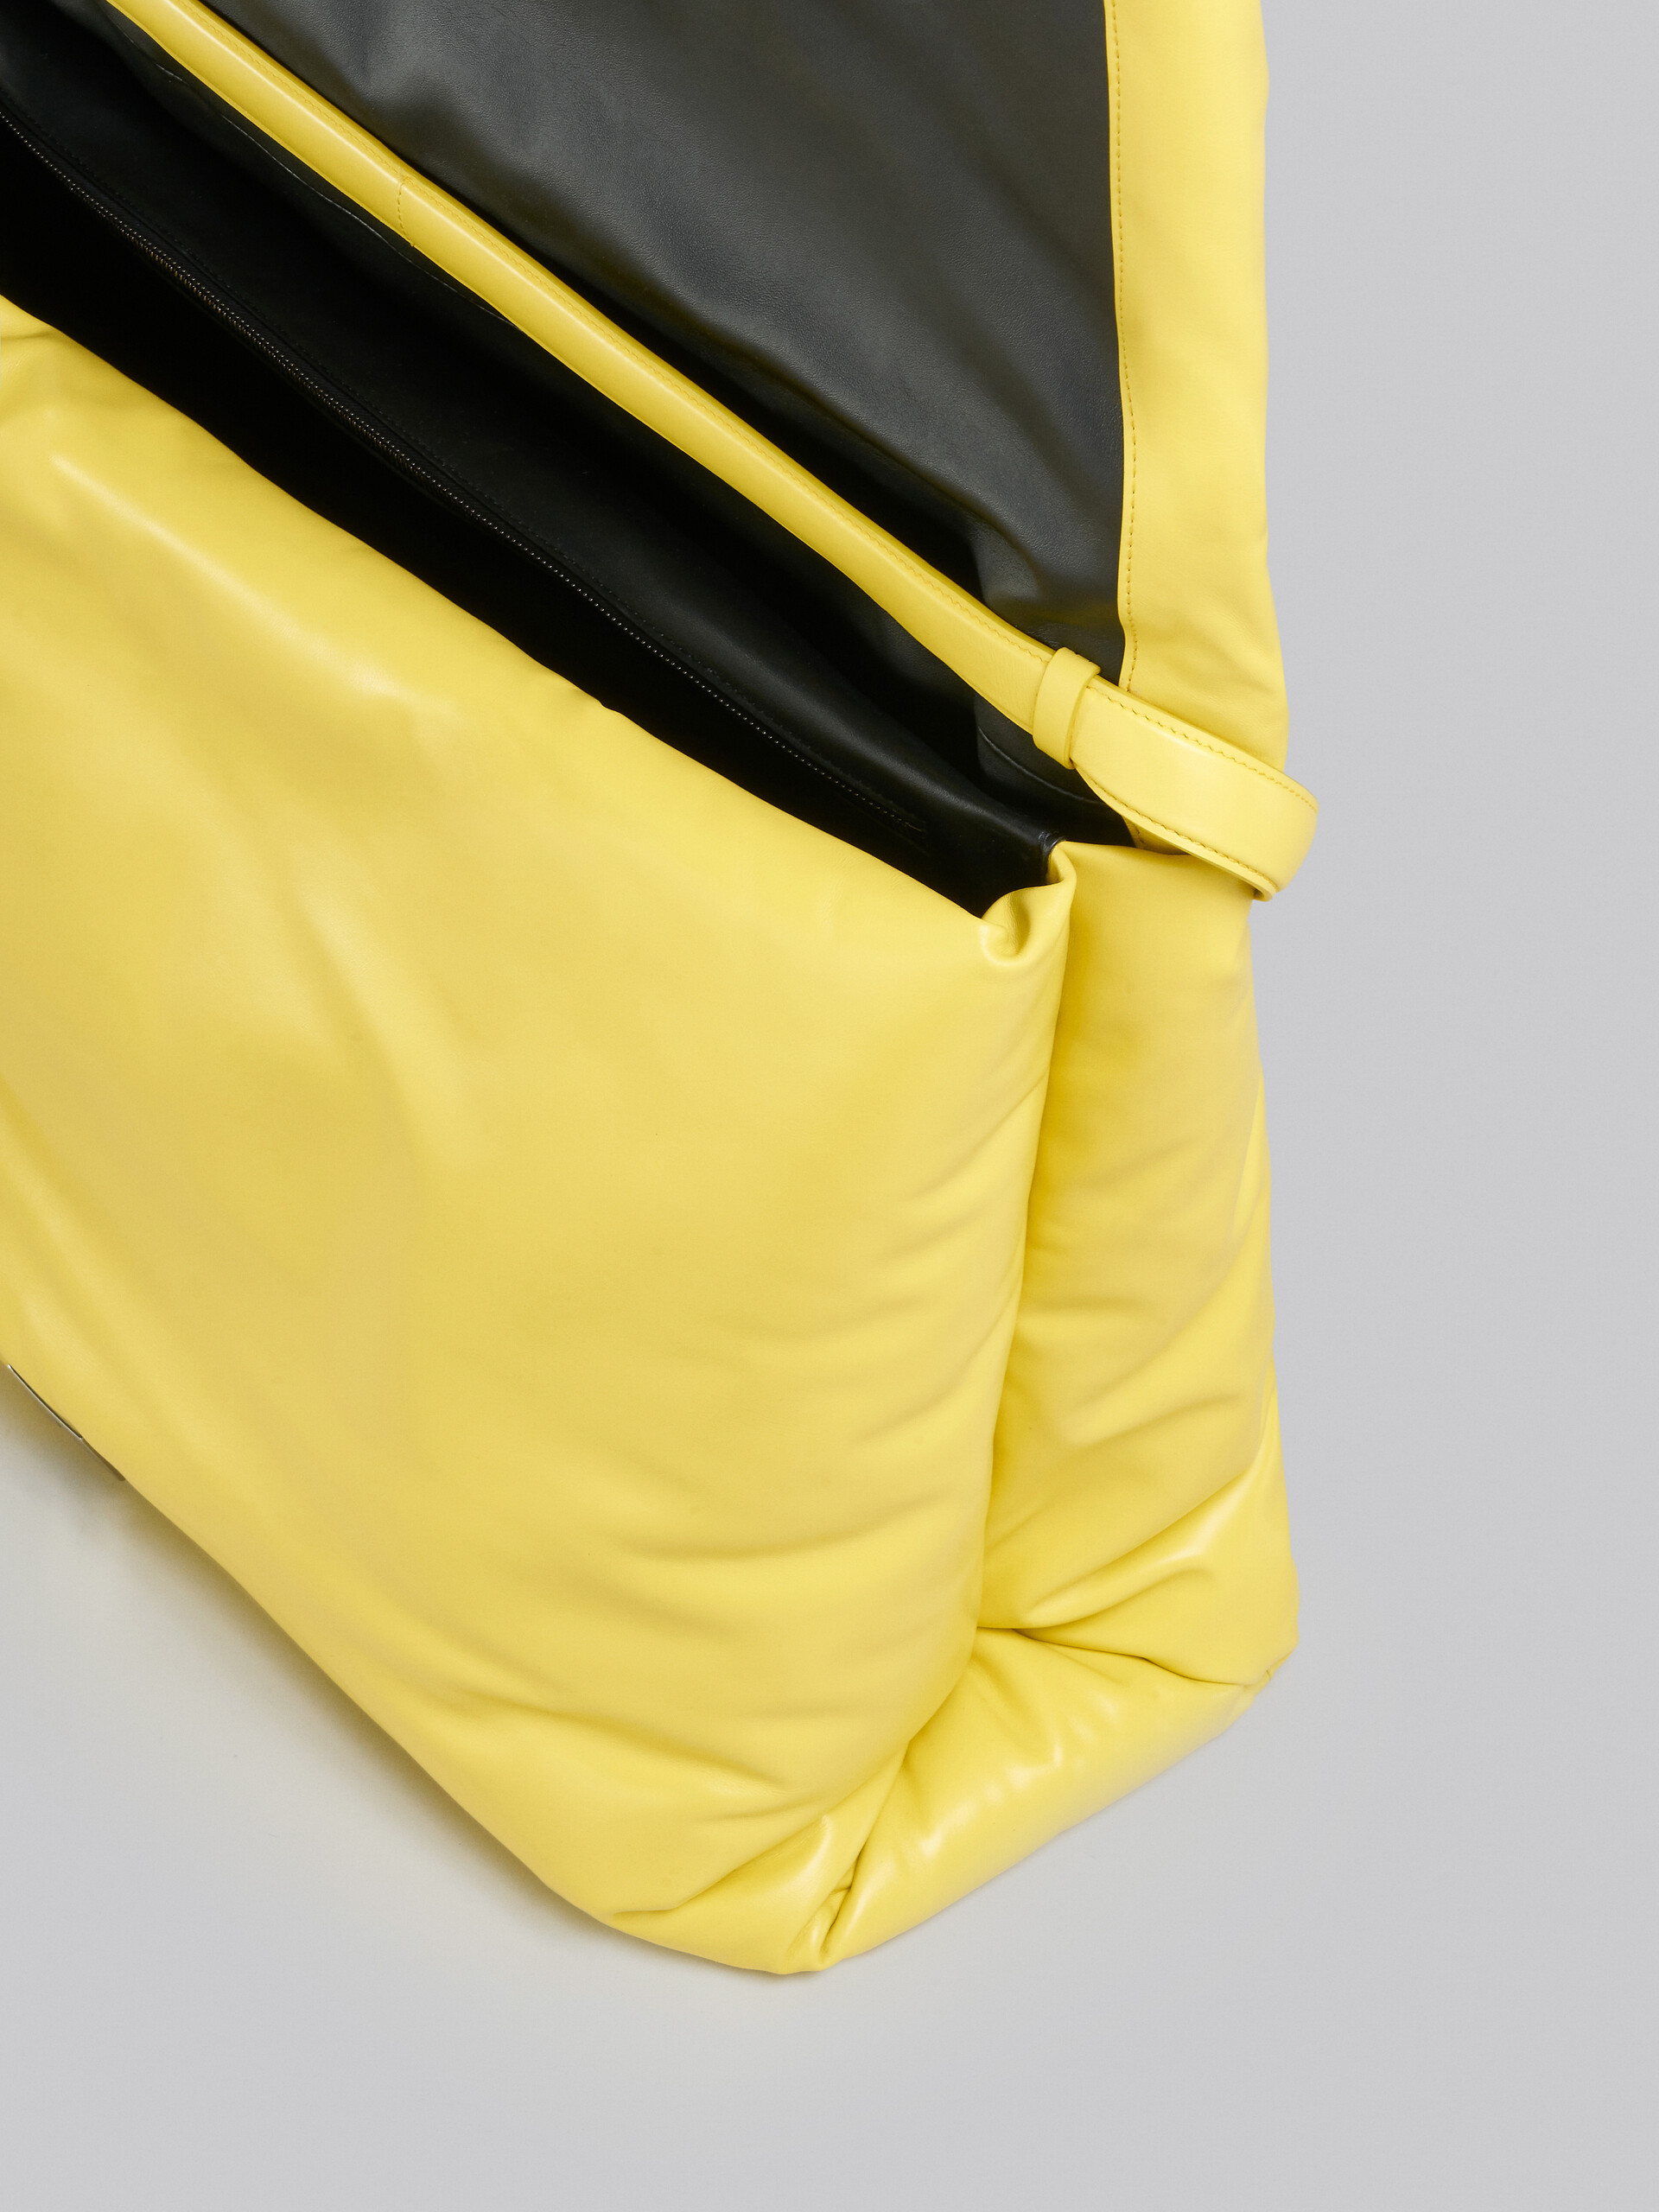 Maxi yellow calsfkin Prisma bag - Shoulder Bag - Image 4